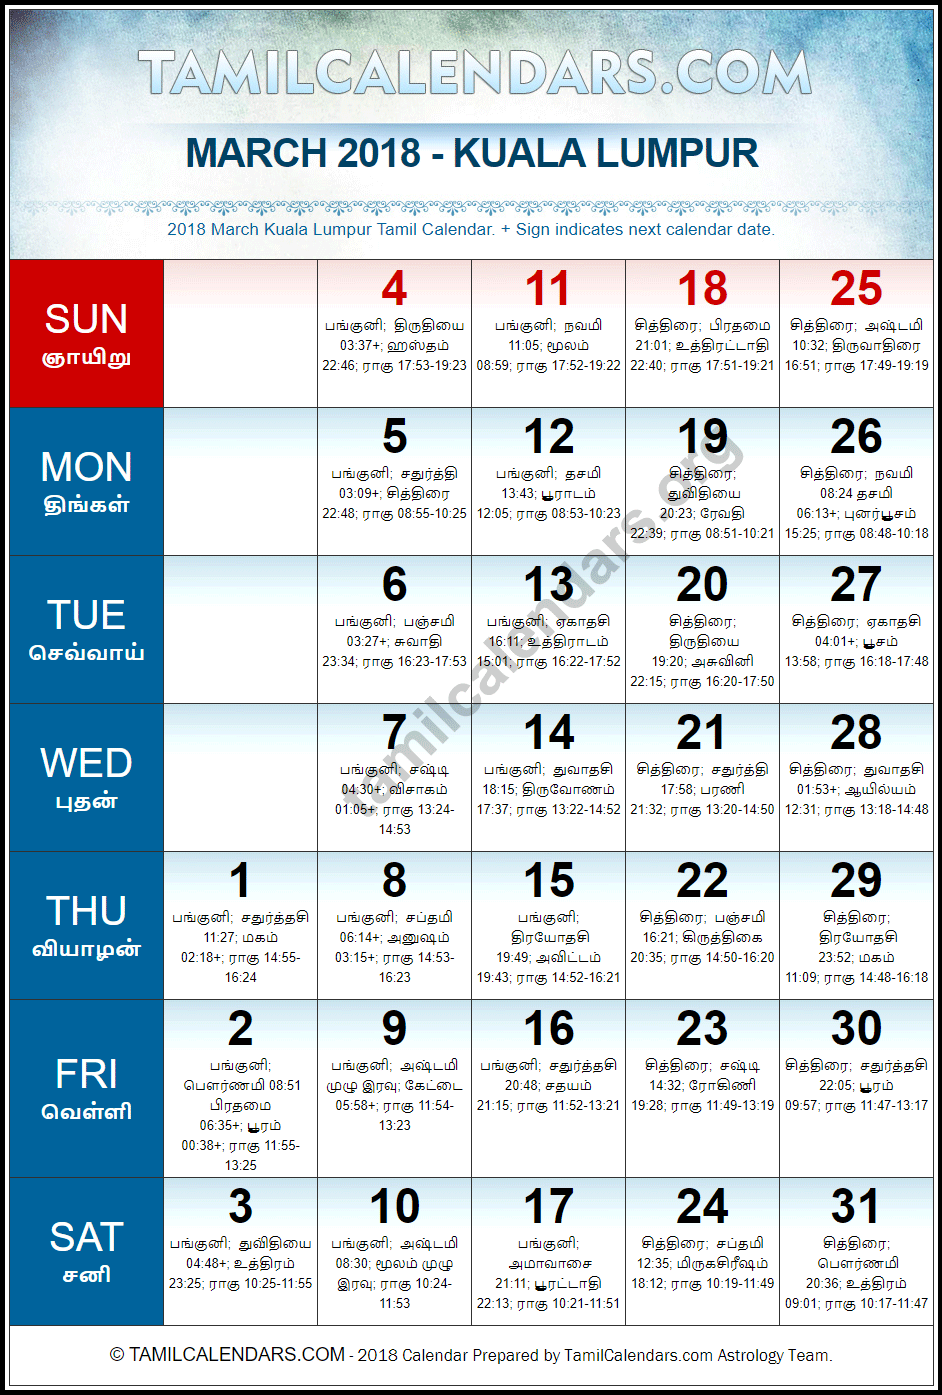 March 2018 Tamil Calendar for Malaysia (Kuala Lumpur)